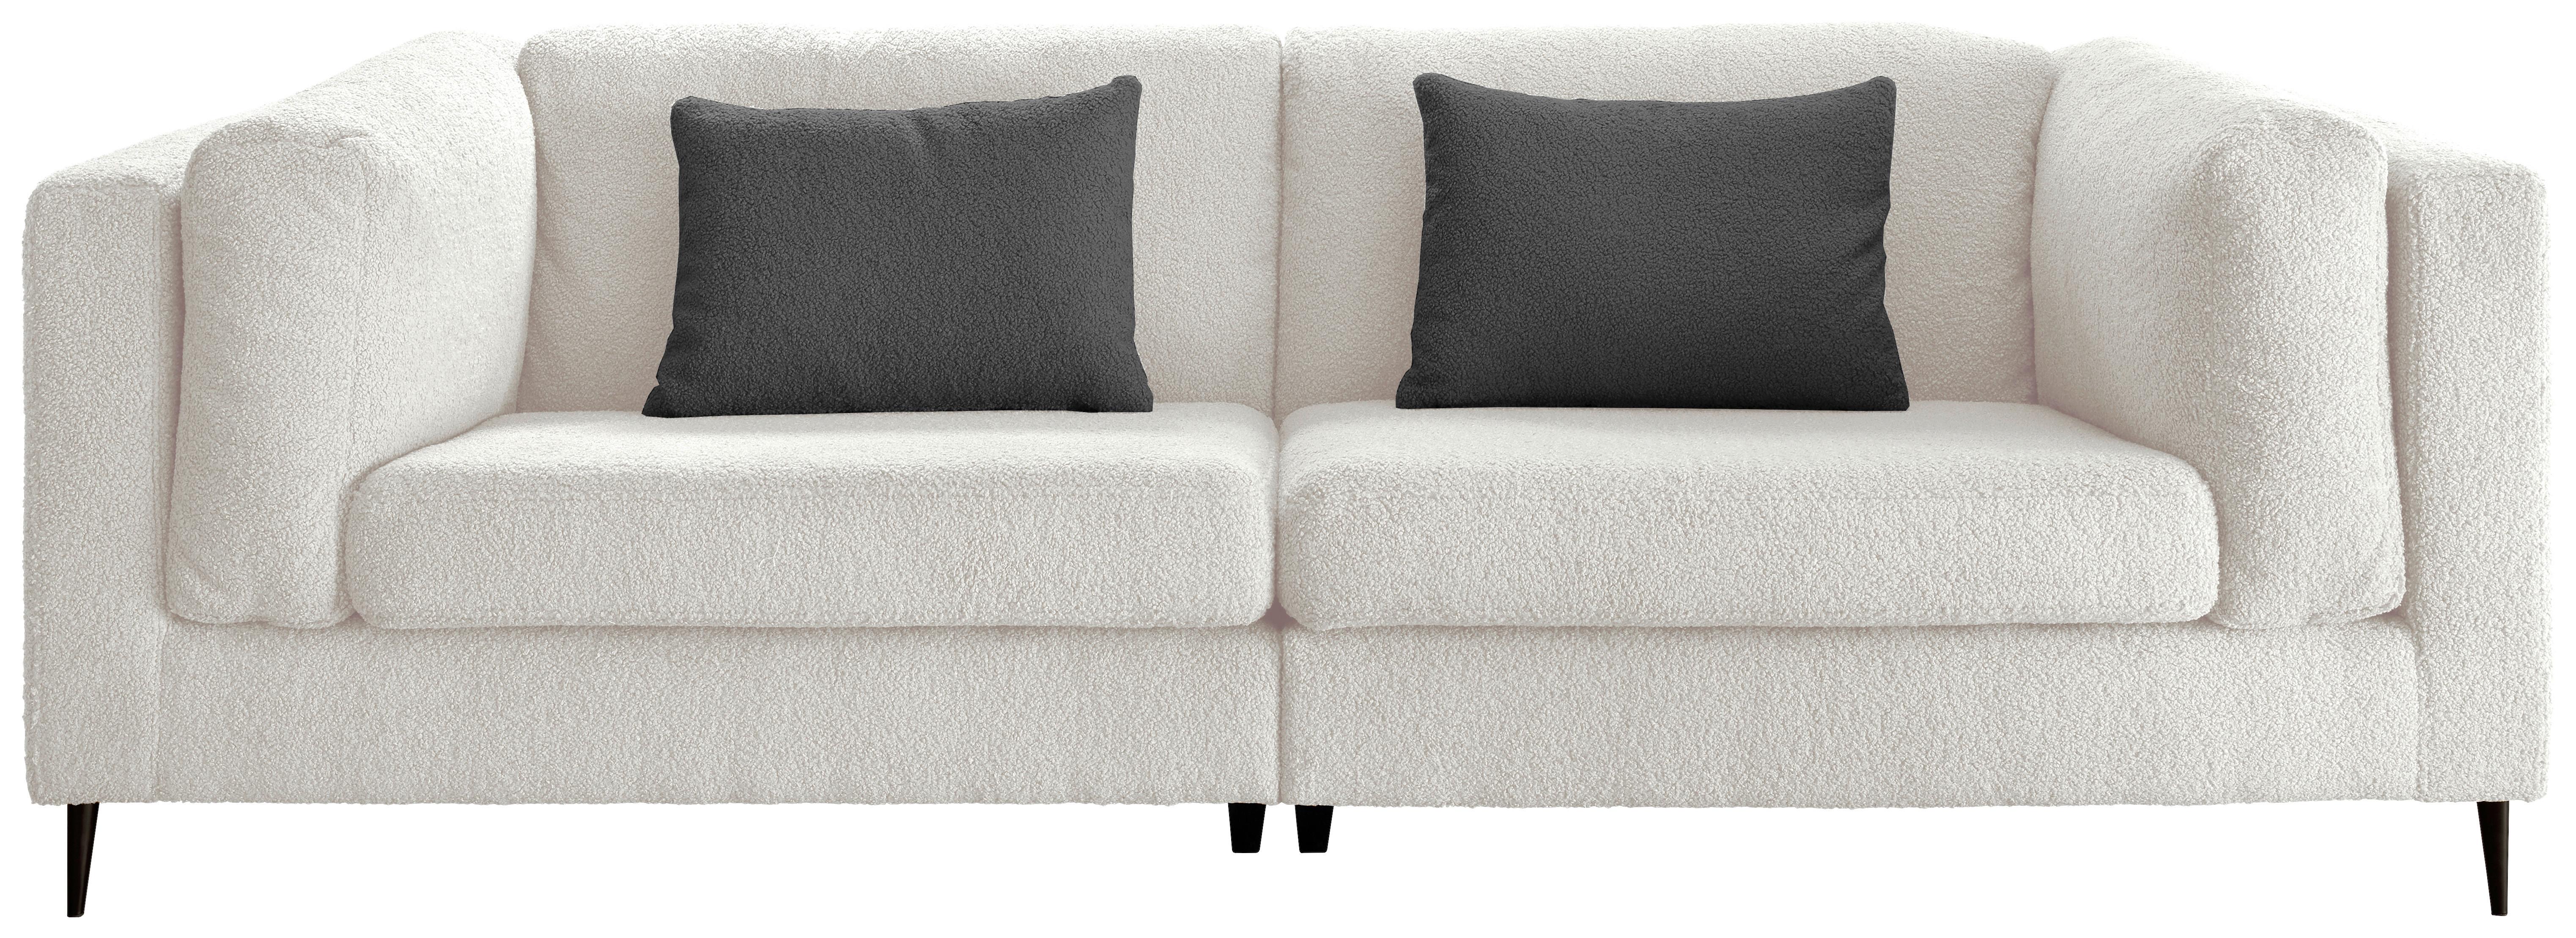 3-Sitzer-Sofa Roma Weiß Teddystoff - Anthrazit/Schwarz, Design, Textil (250/82/112cm) - Livetastic